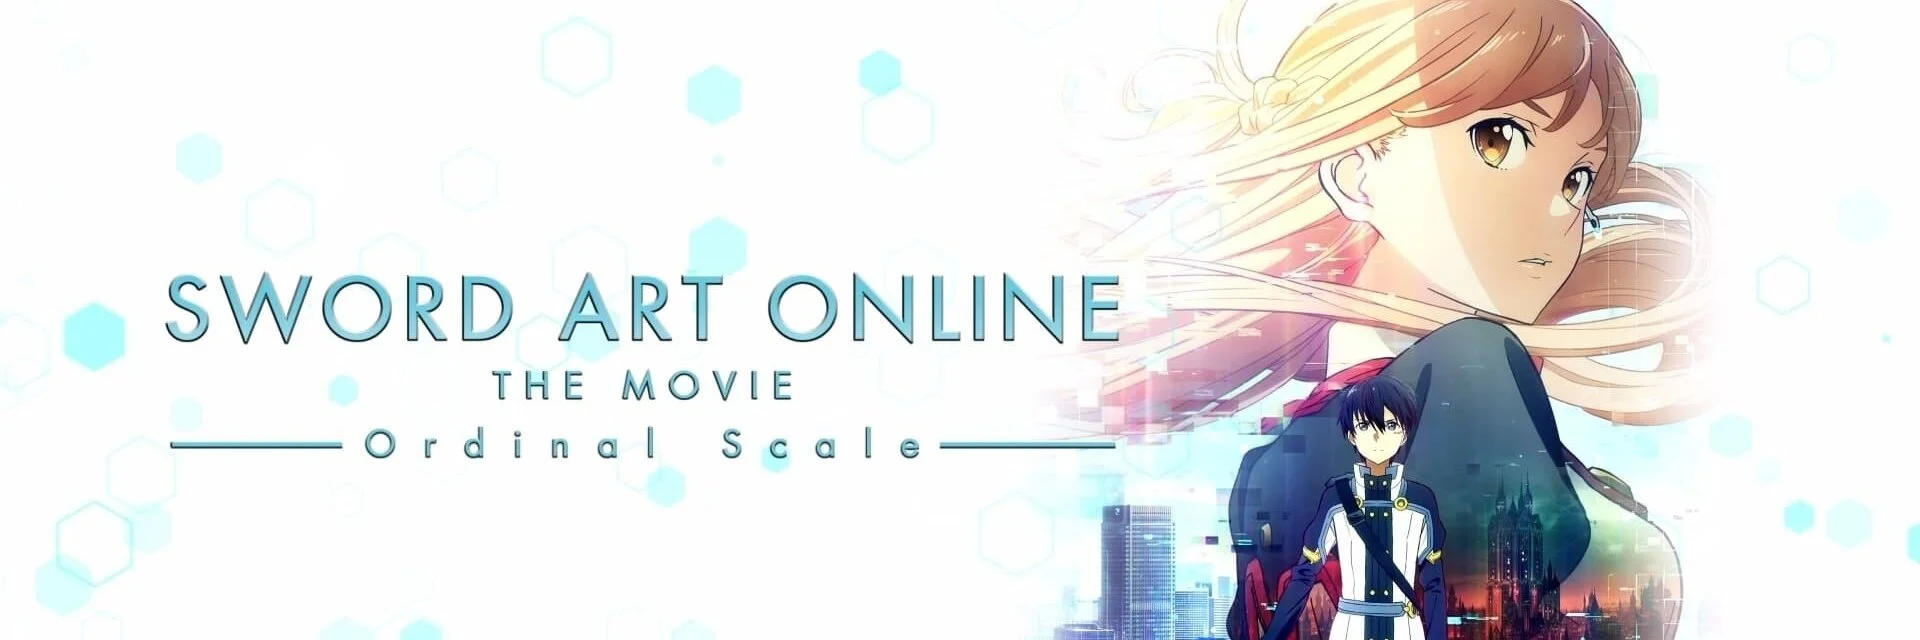 Sword Art Online The Movie: Ordinal Scale 4K 2017 big poster